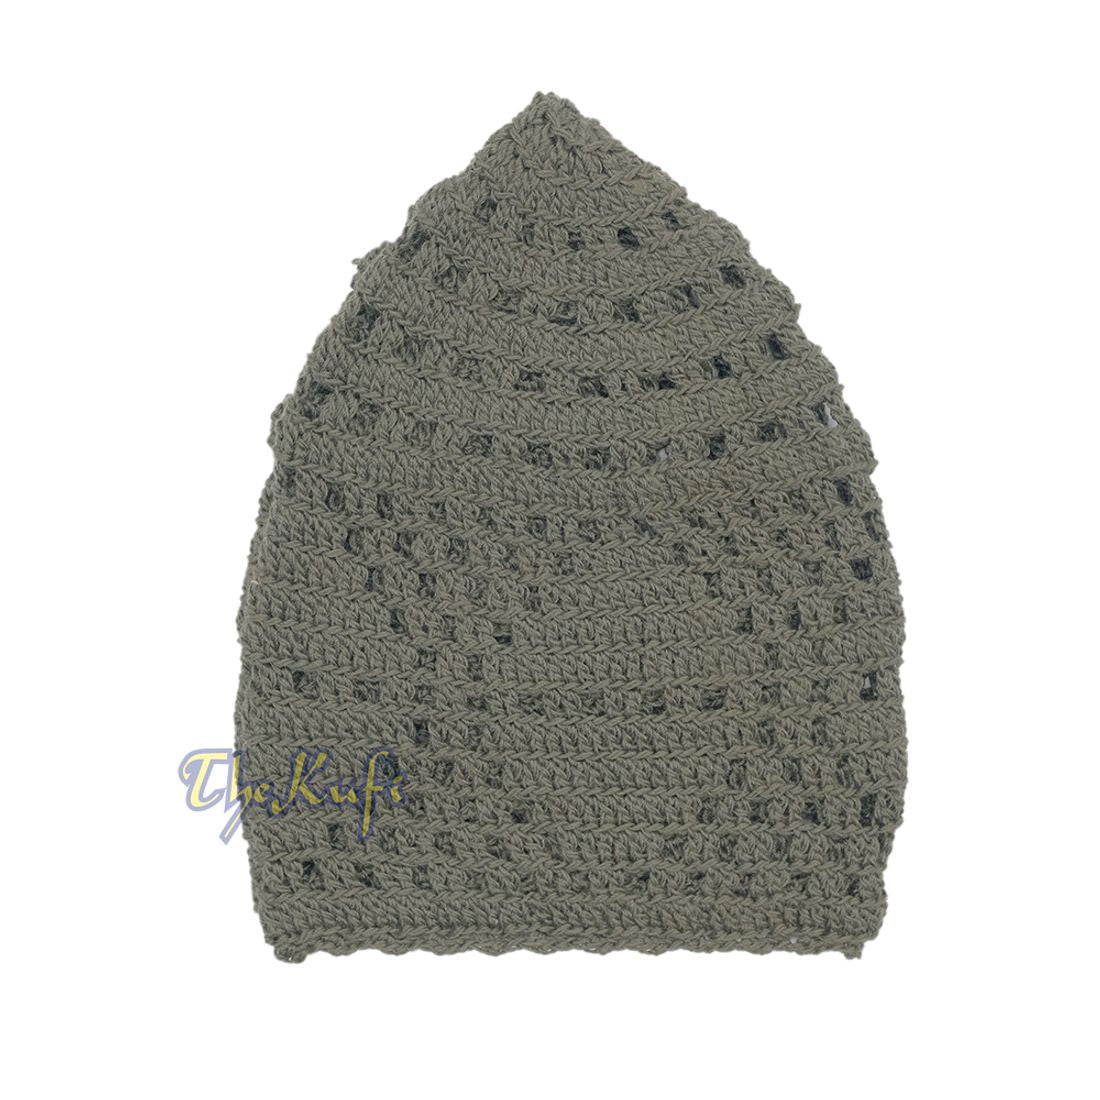 Dark Army Green Crocheted – Open-weave Diamond Design Stretchable Kufi